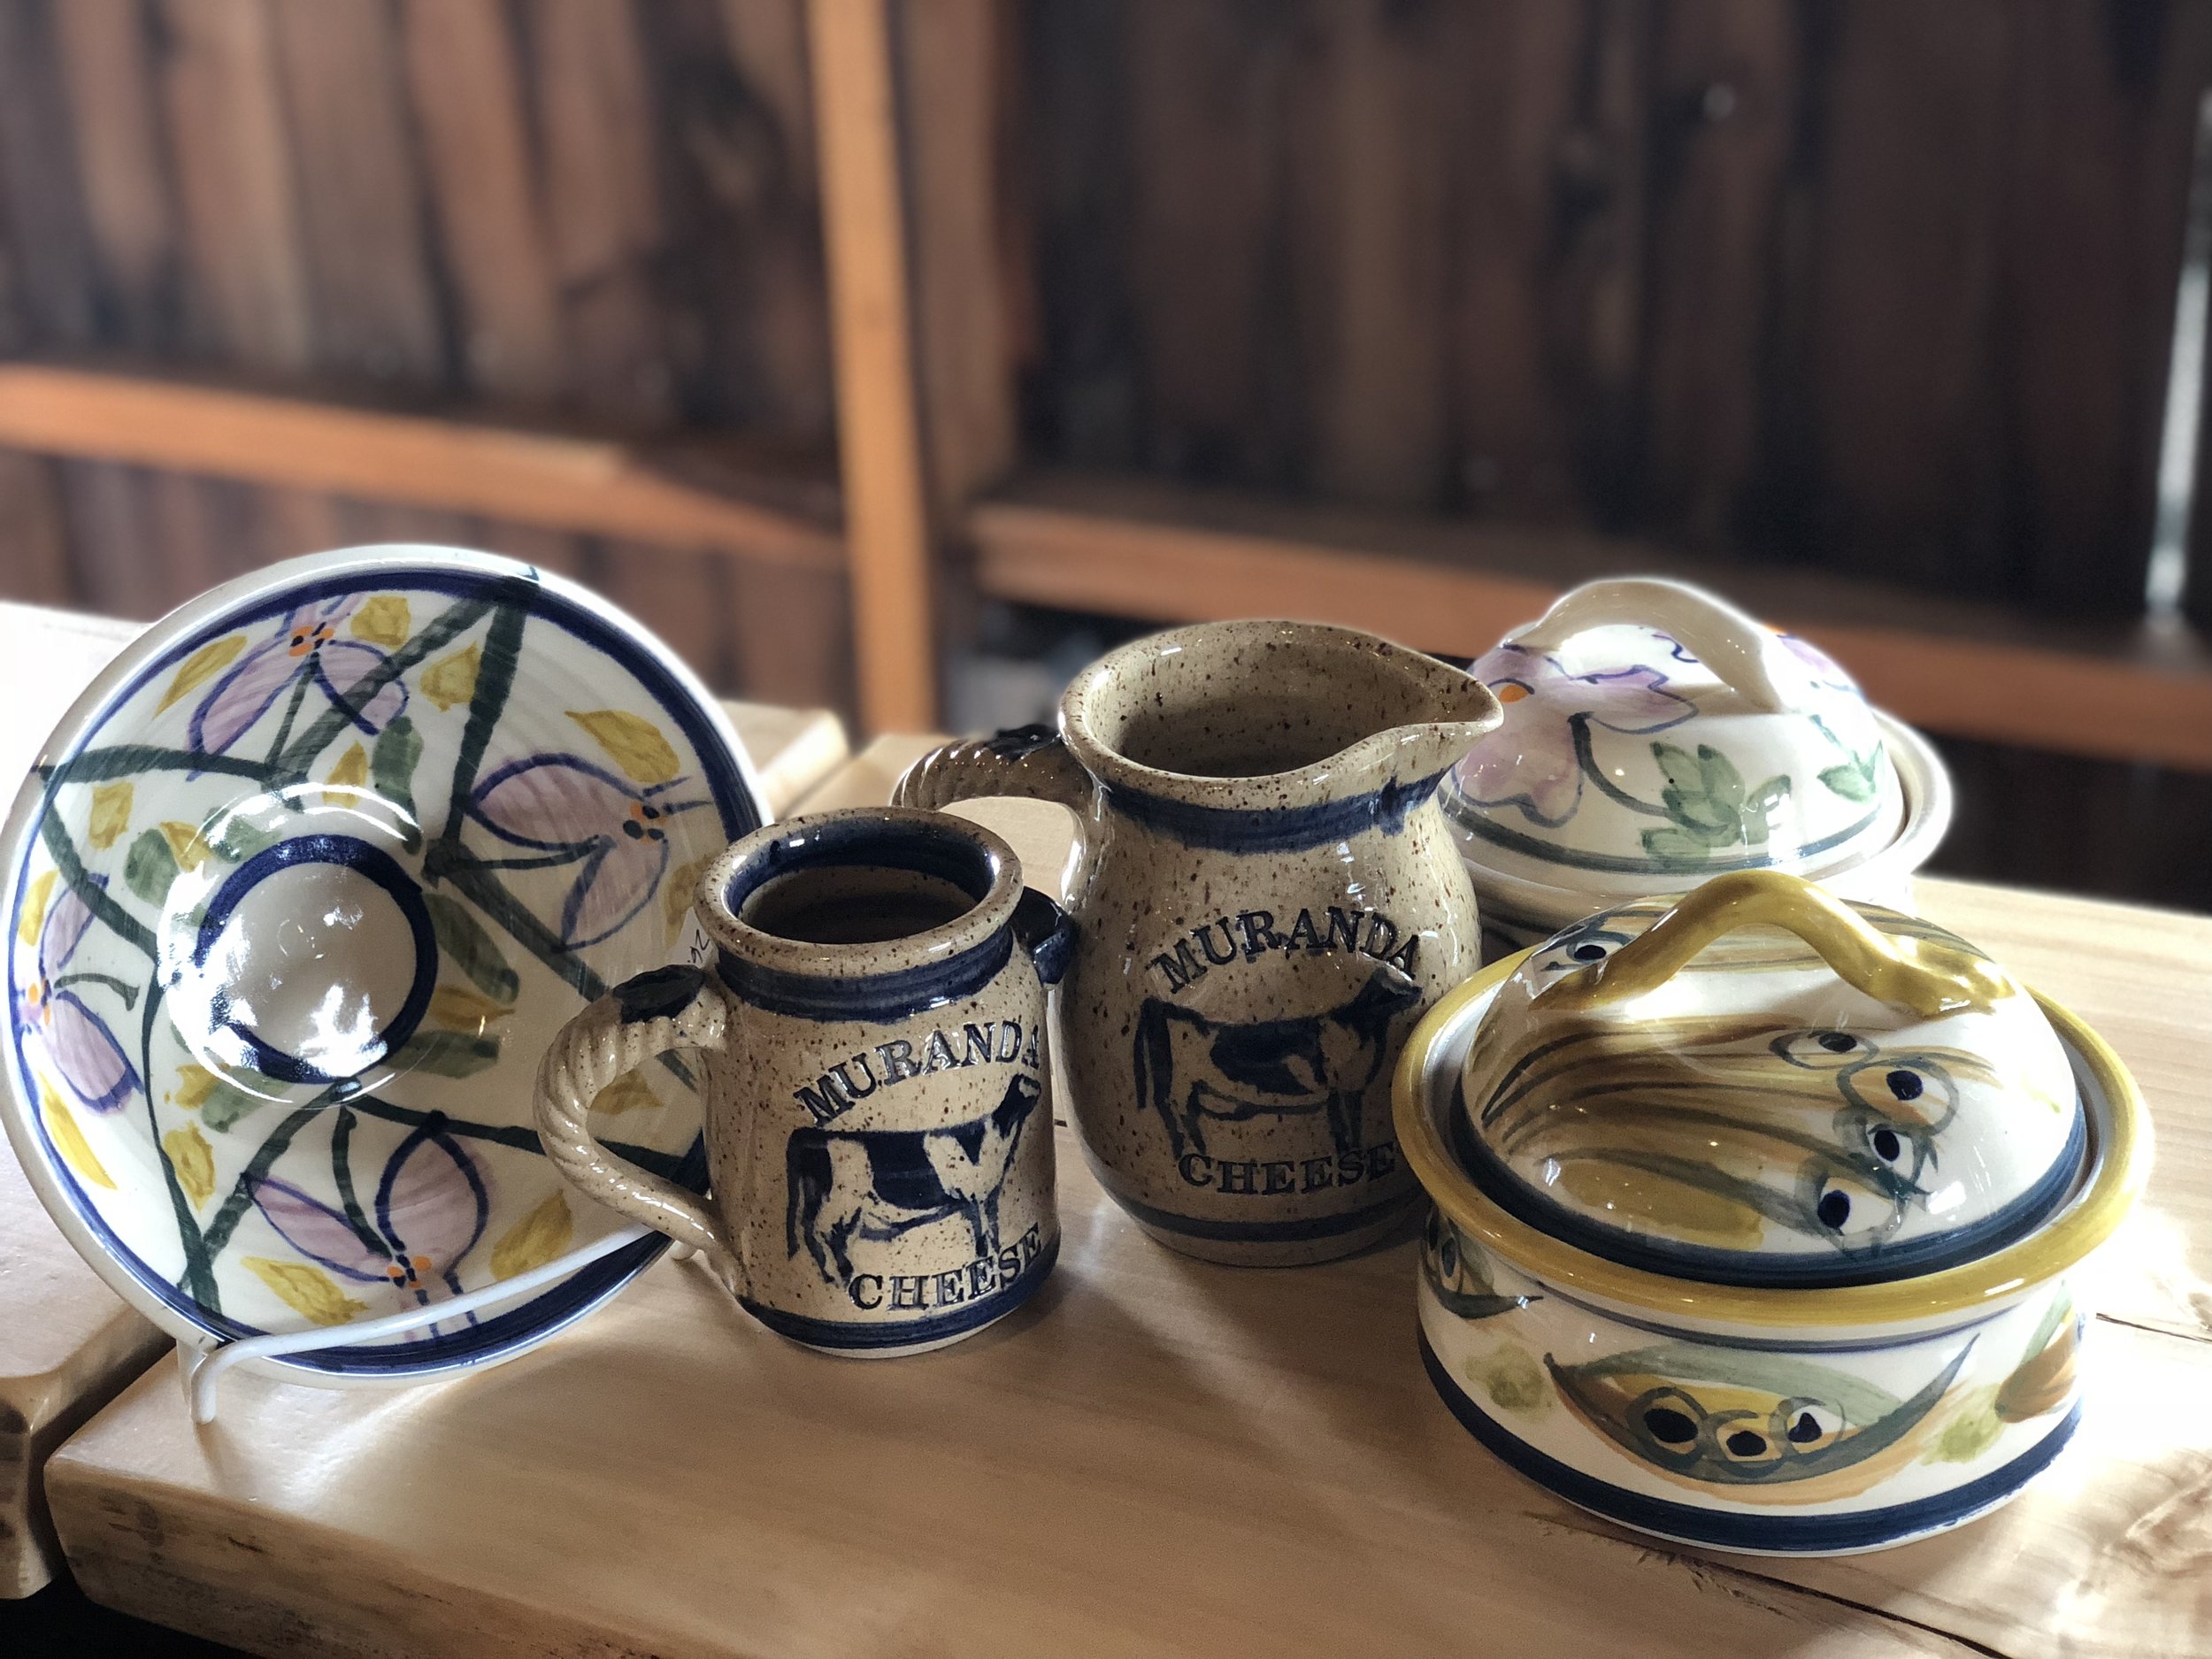 Locally made pottery